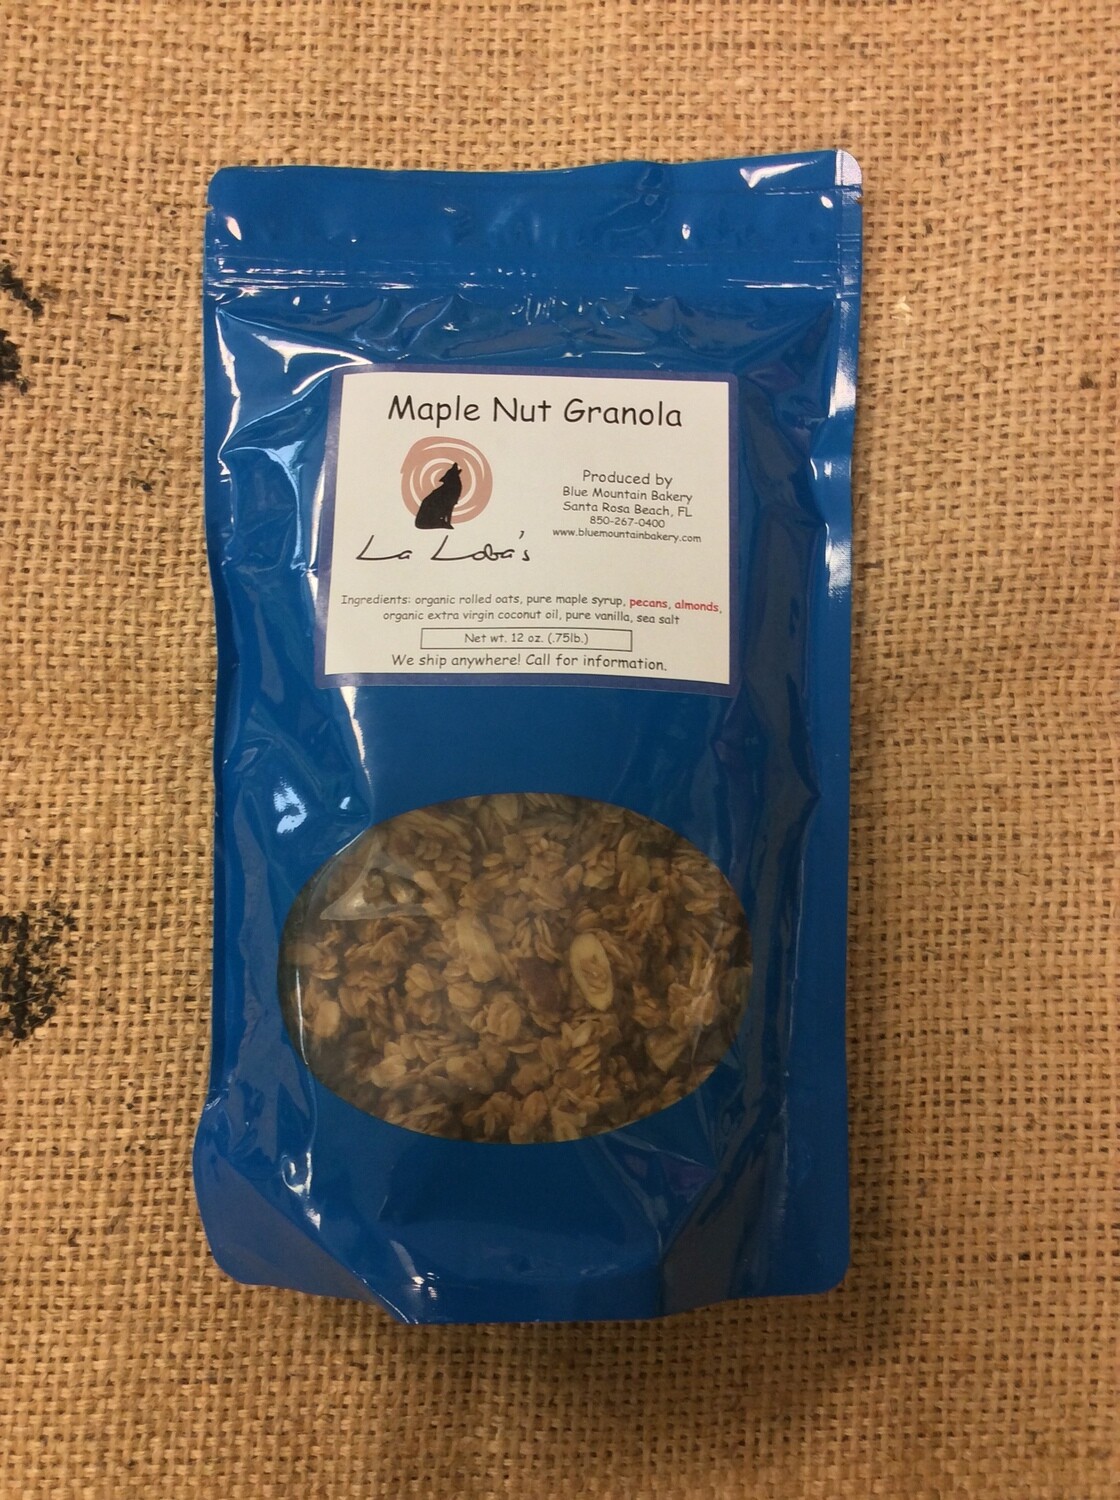 La Loba's Maple Nut Granola